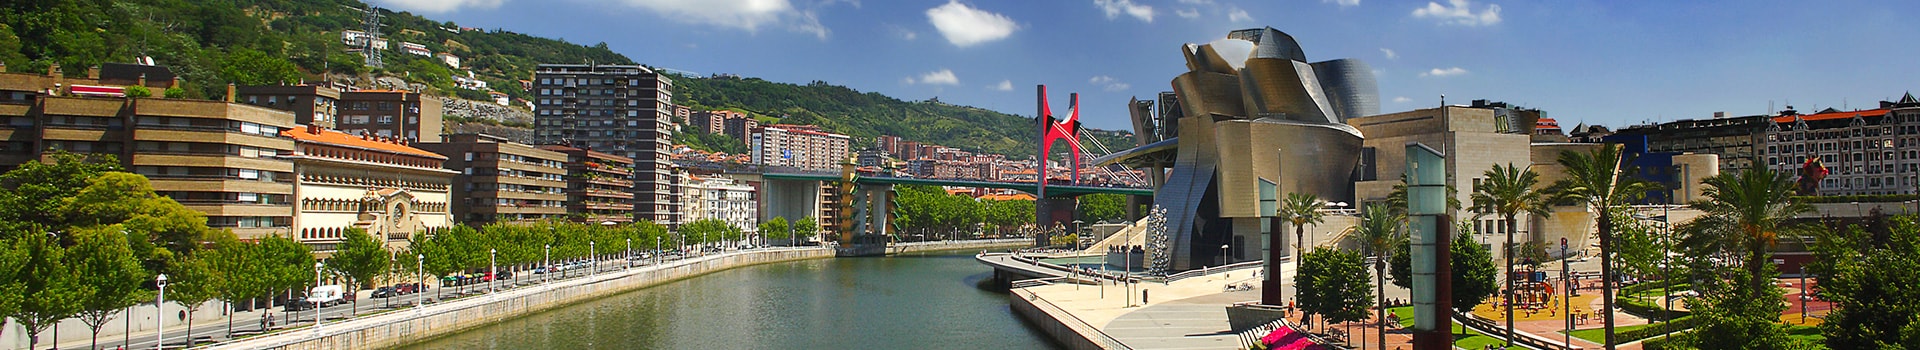 Valladolid - Bilbao